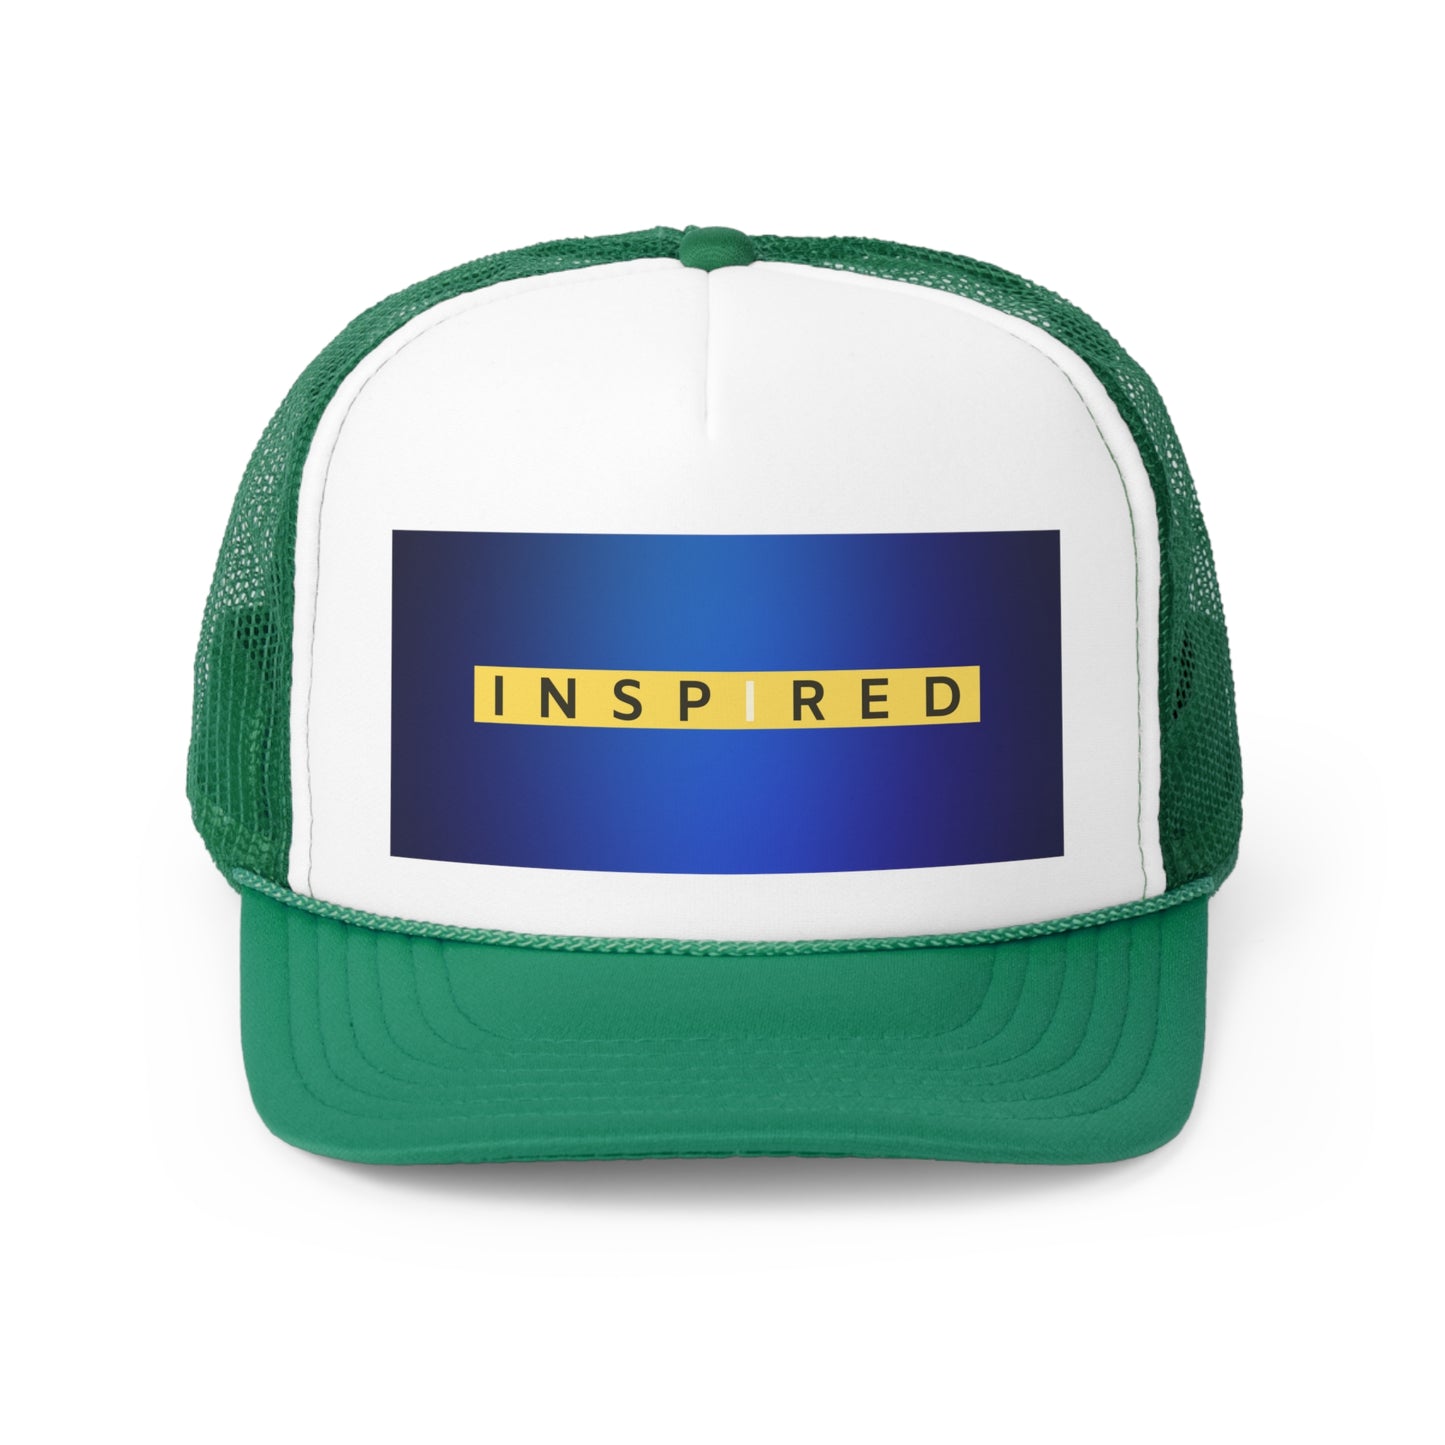 INSPIRED Original Trucker Cap